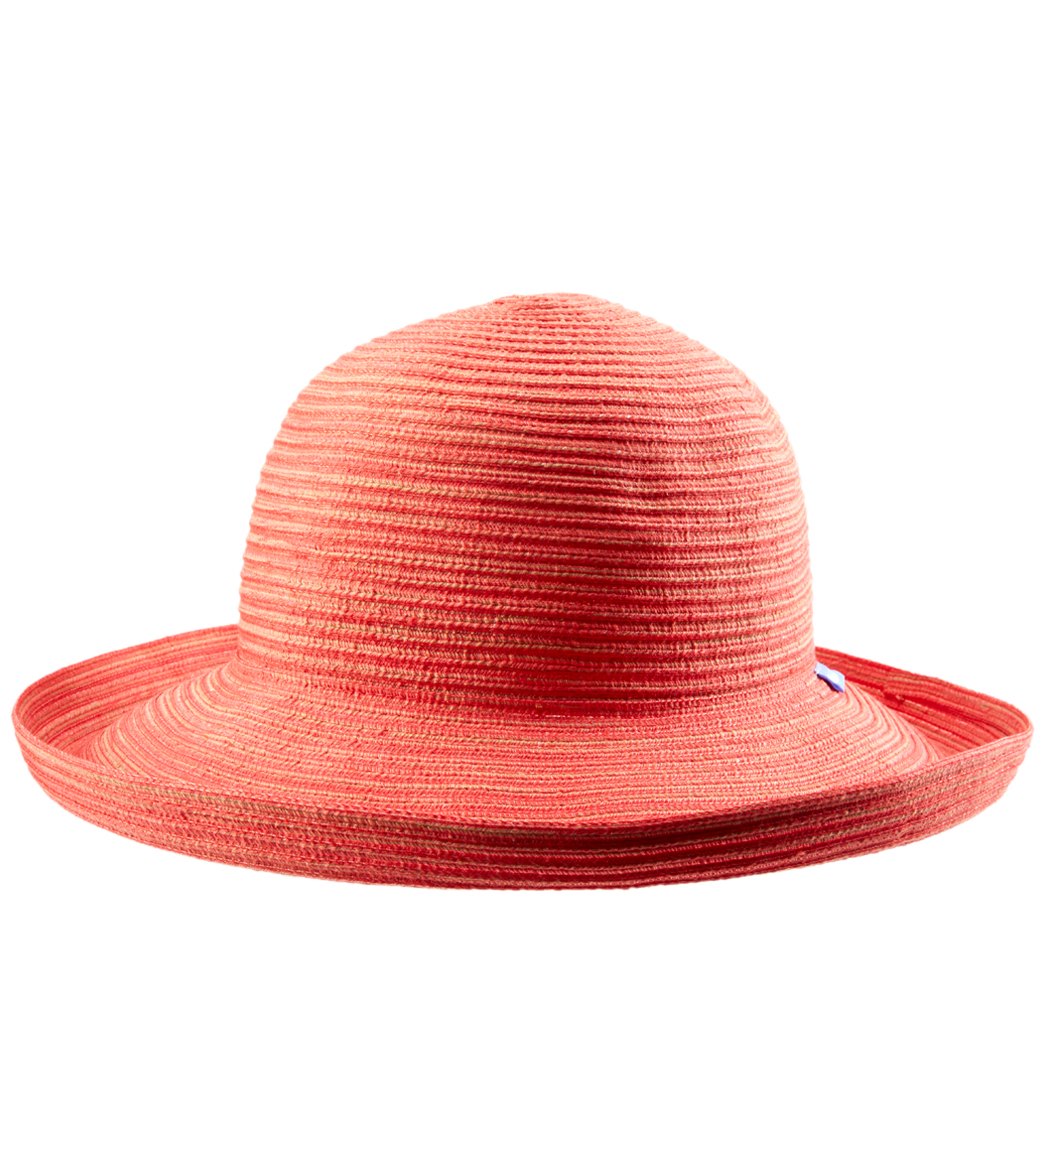 Wallaroo Women's Sydney Sun Hat - Red - Swimoutlet.com